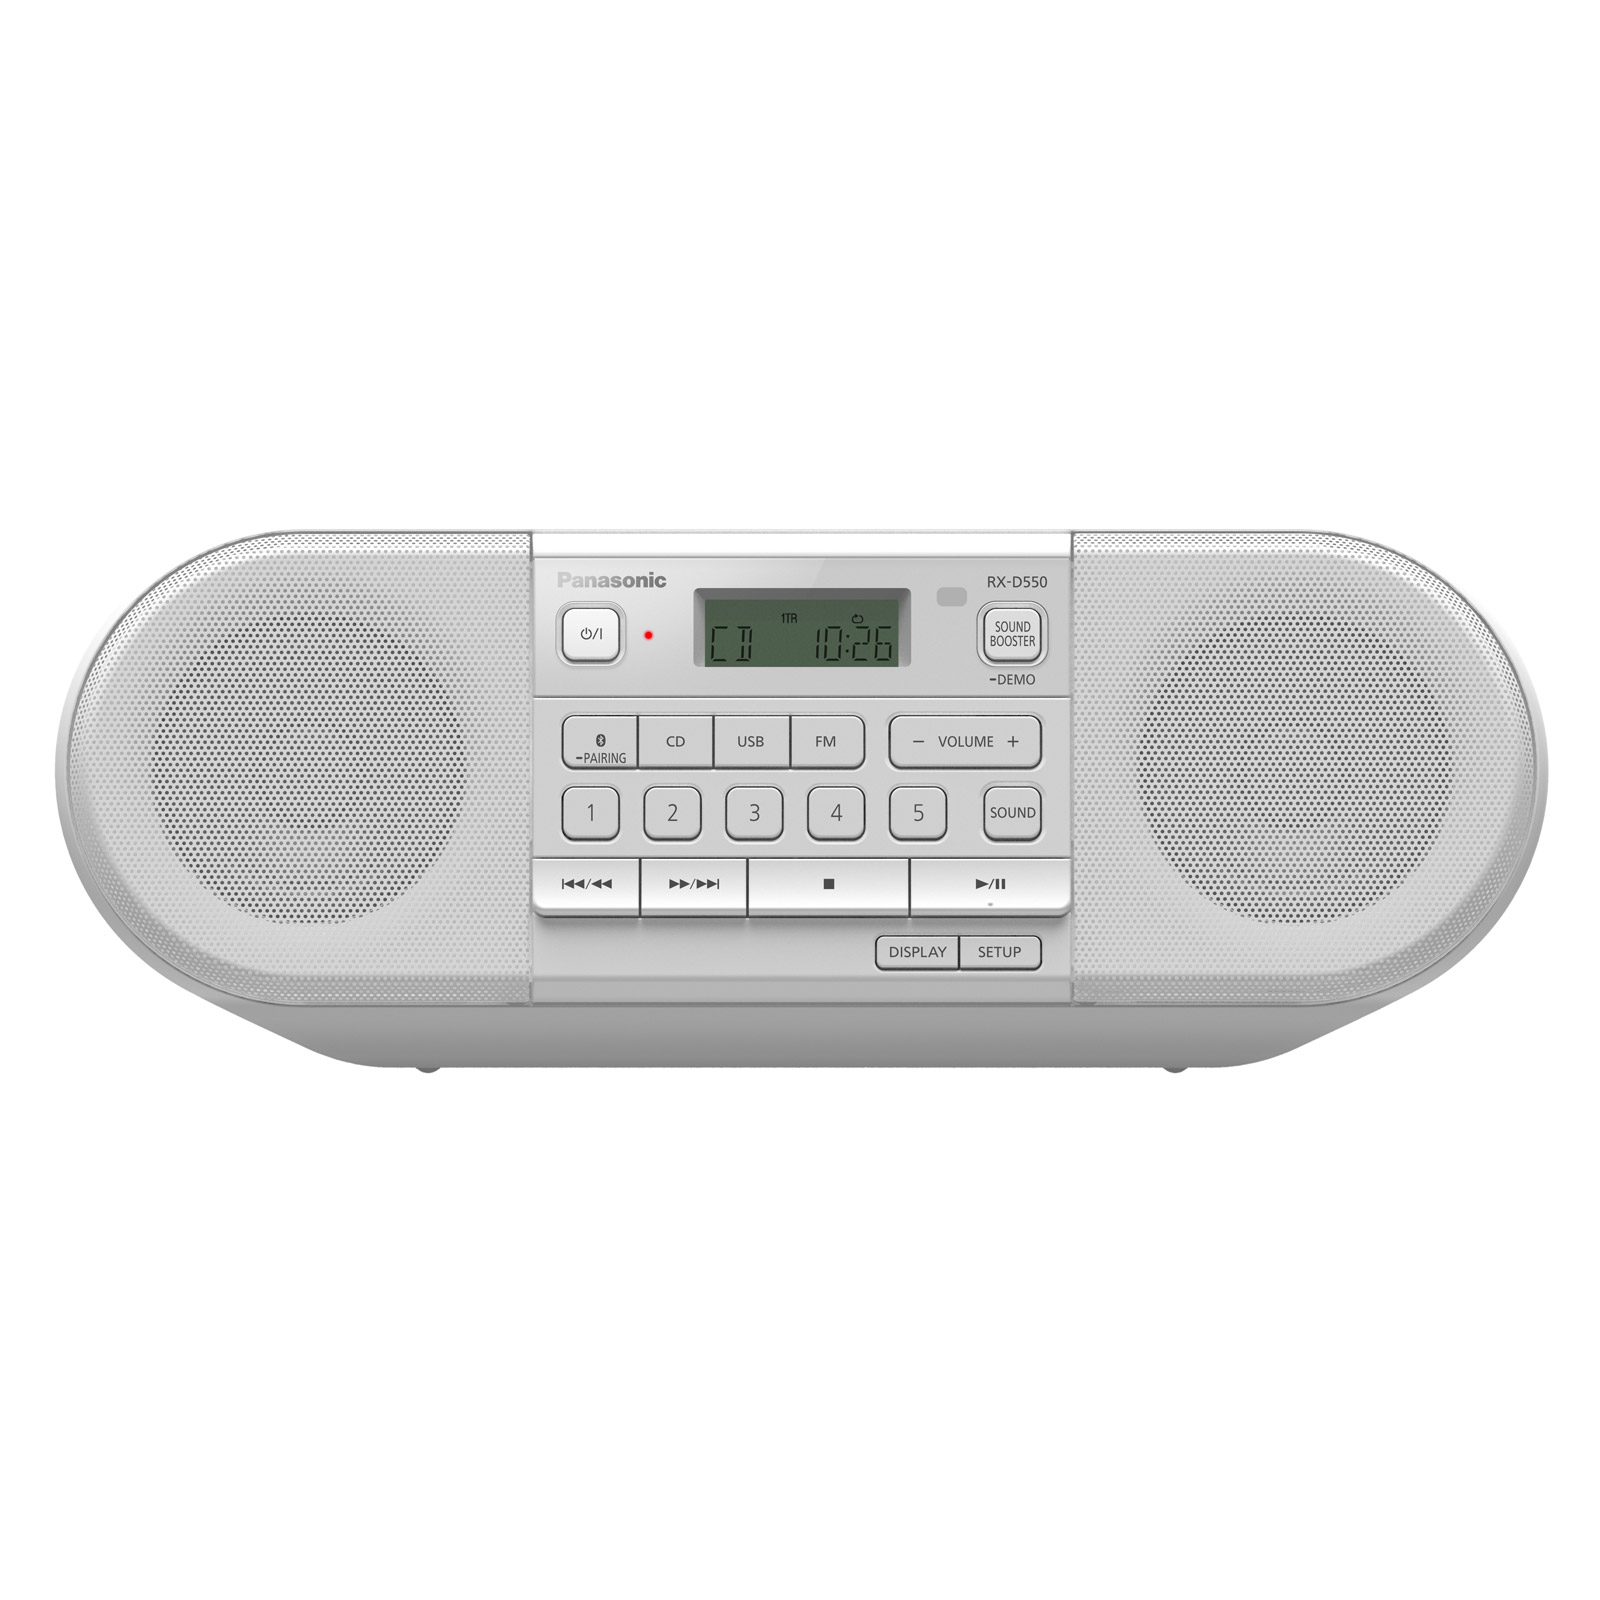 Panasonic RX D550E W Portable Stereo CD System in White FM Bluetooth U